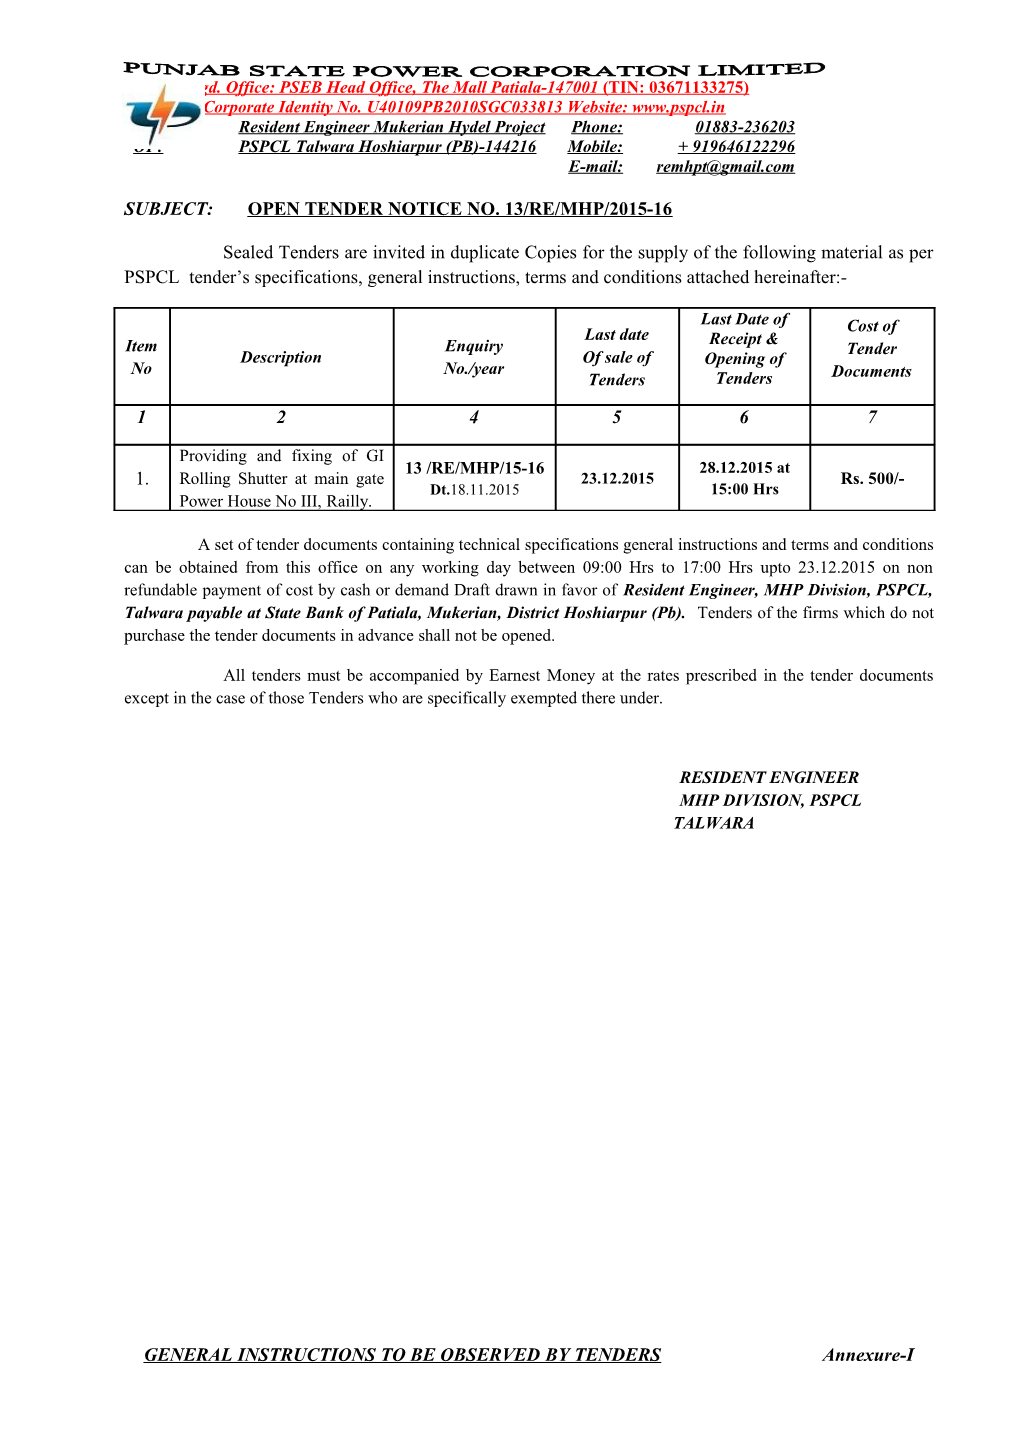 Subject: Open Tender Notice No. 13/Re/Mhp/2015-16